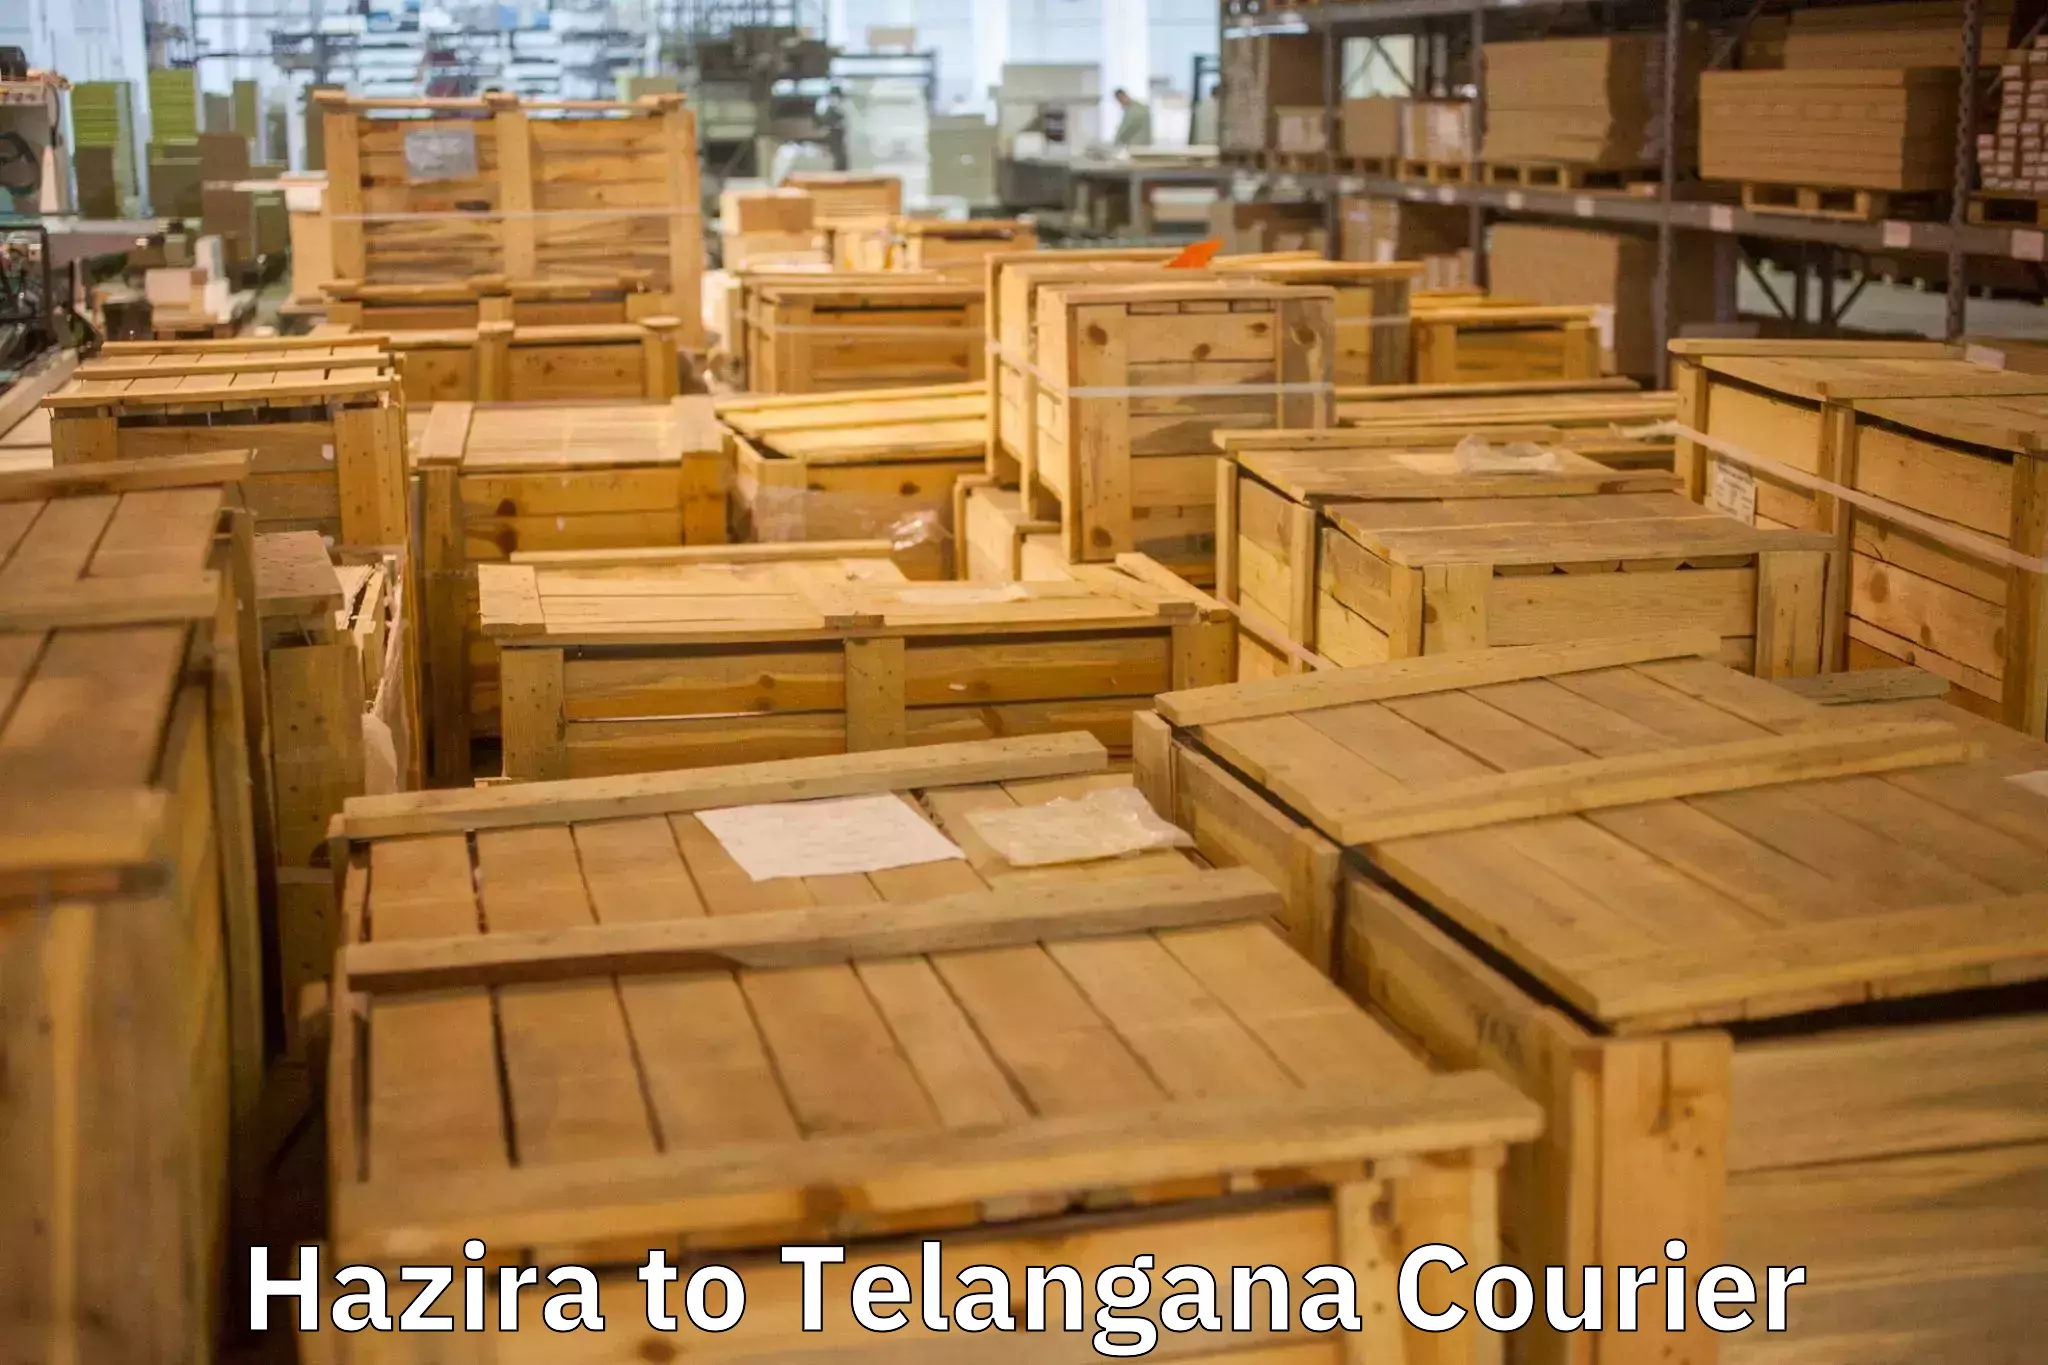 Professional movers and packers Hazira to Telangana